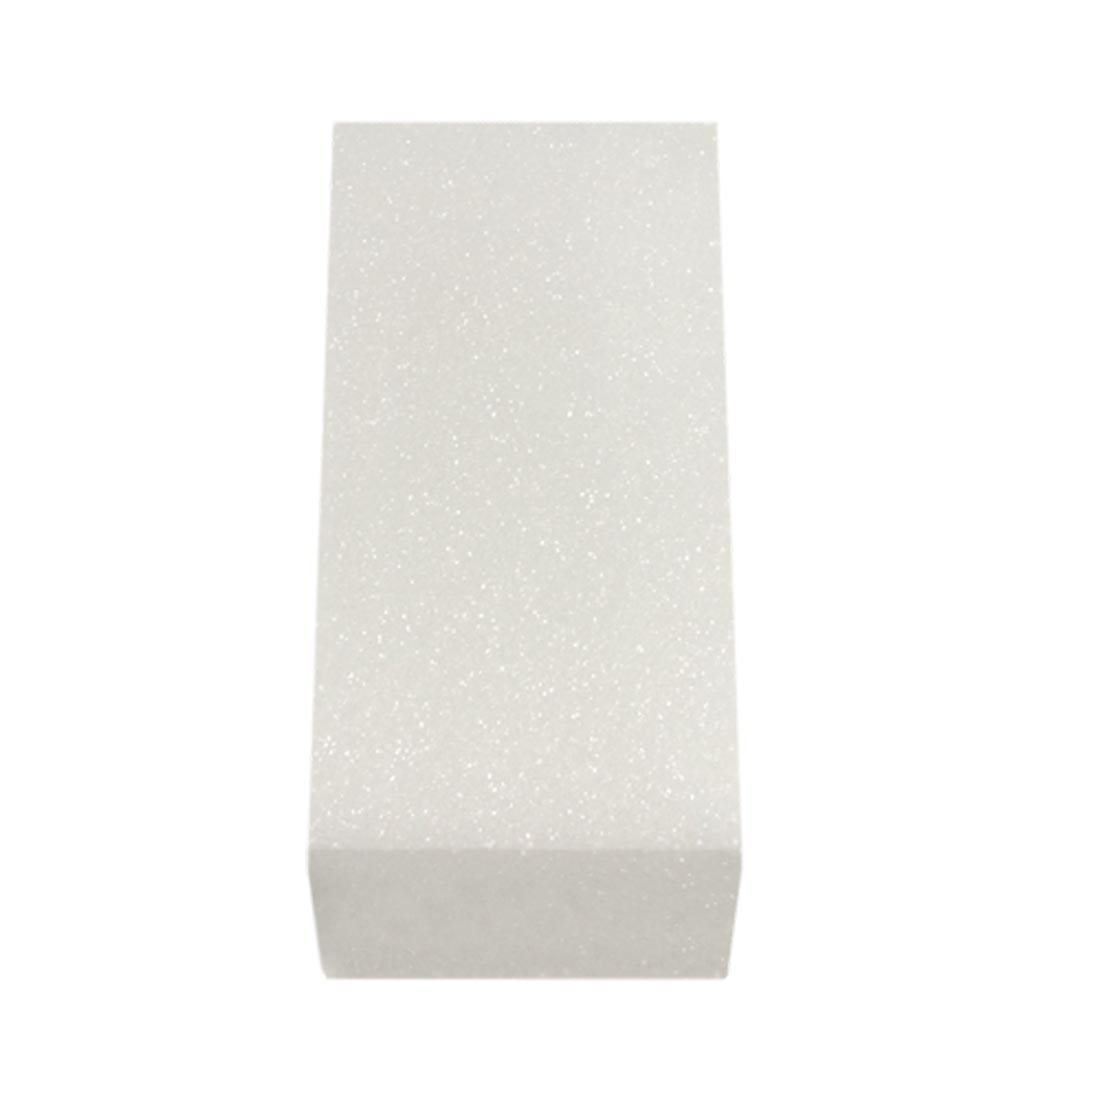 Rectangular White Styrofoam Sheet